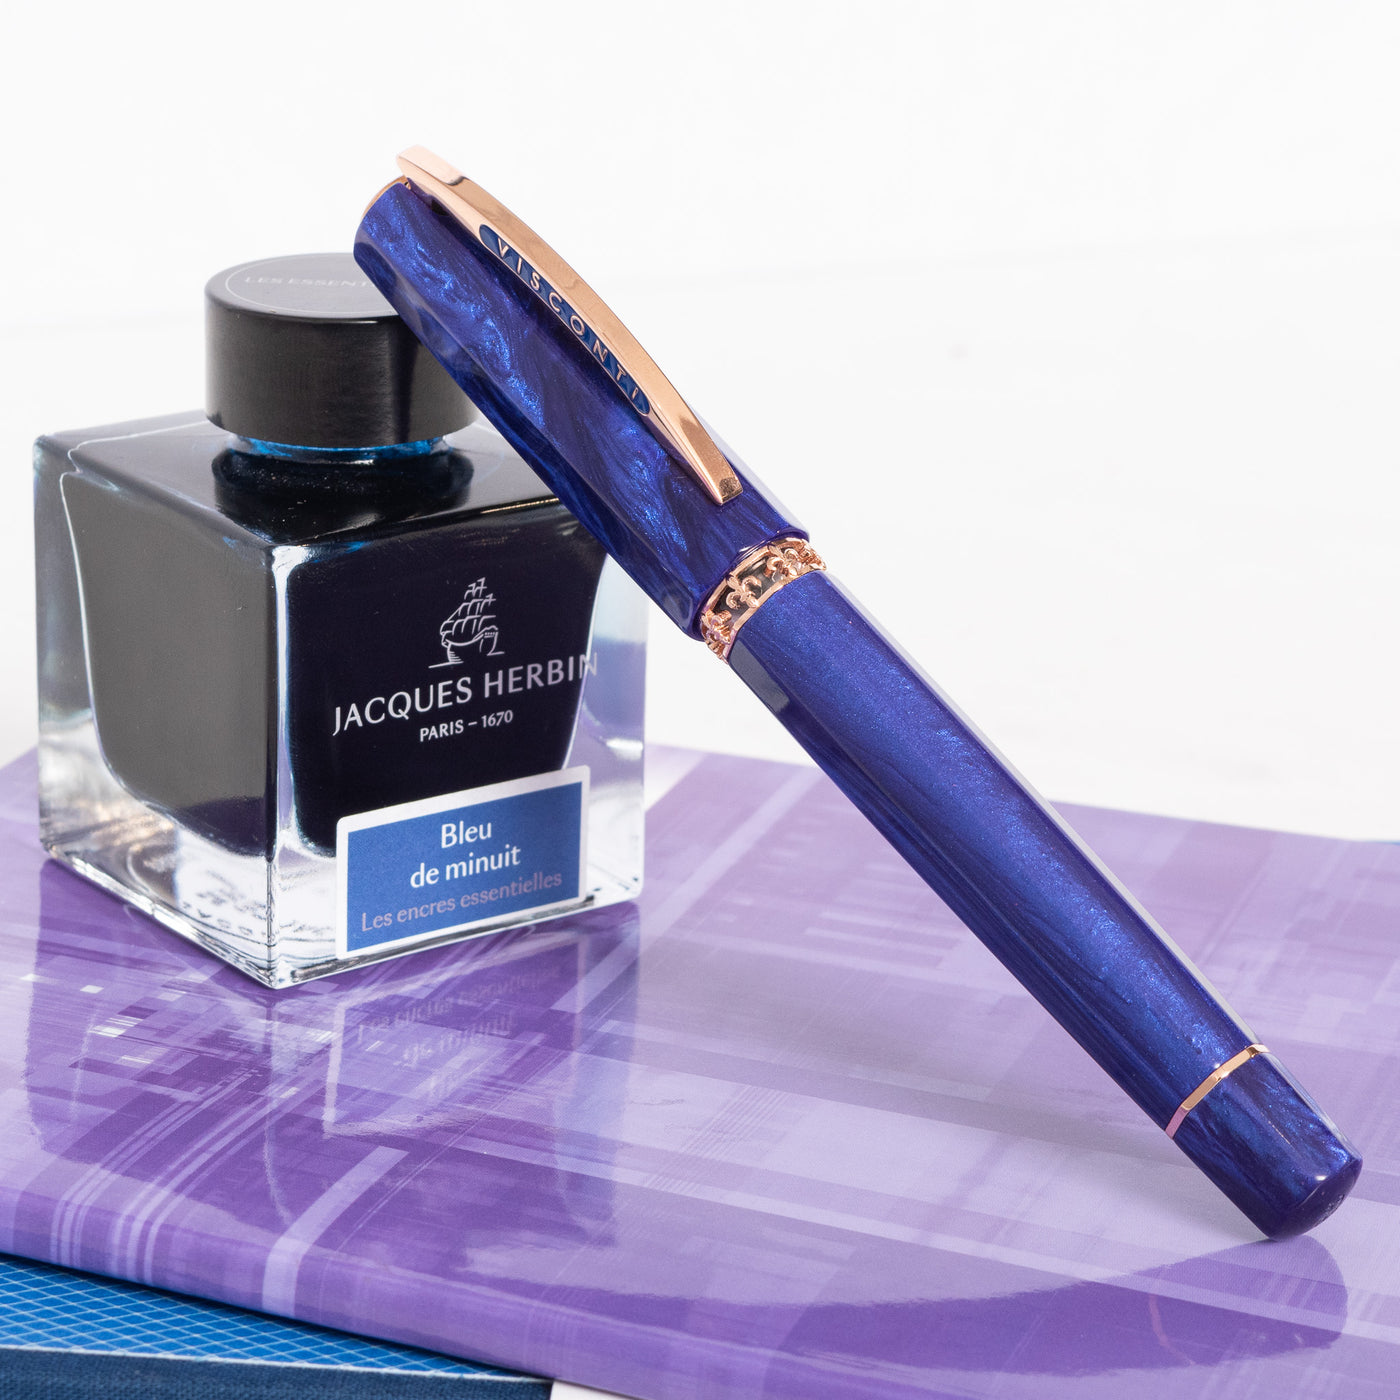 Visconti Medici Viola Limited Edition Fountain Pen capped